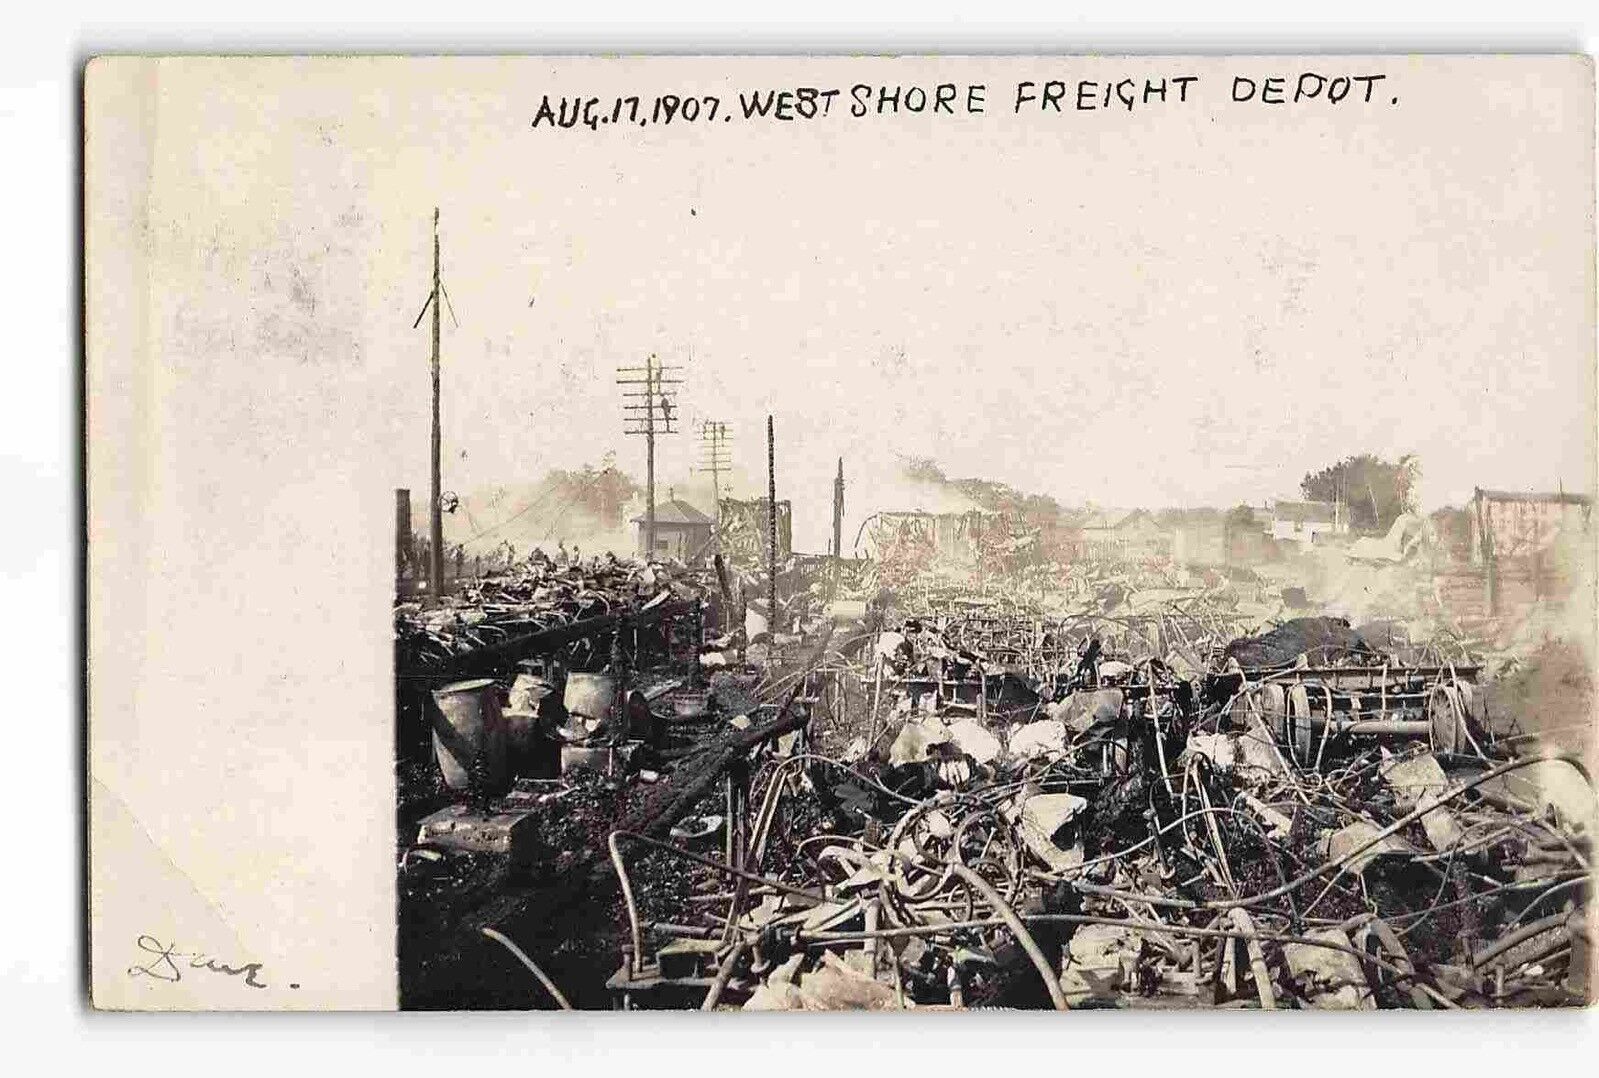 jwj23b WEST SHORE FREIGHT DEPOT FIRE 8/17/1907 KINGSTON NY RPPC/postcard 1907 PM